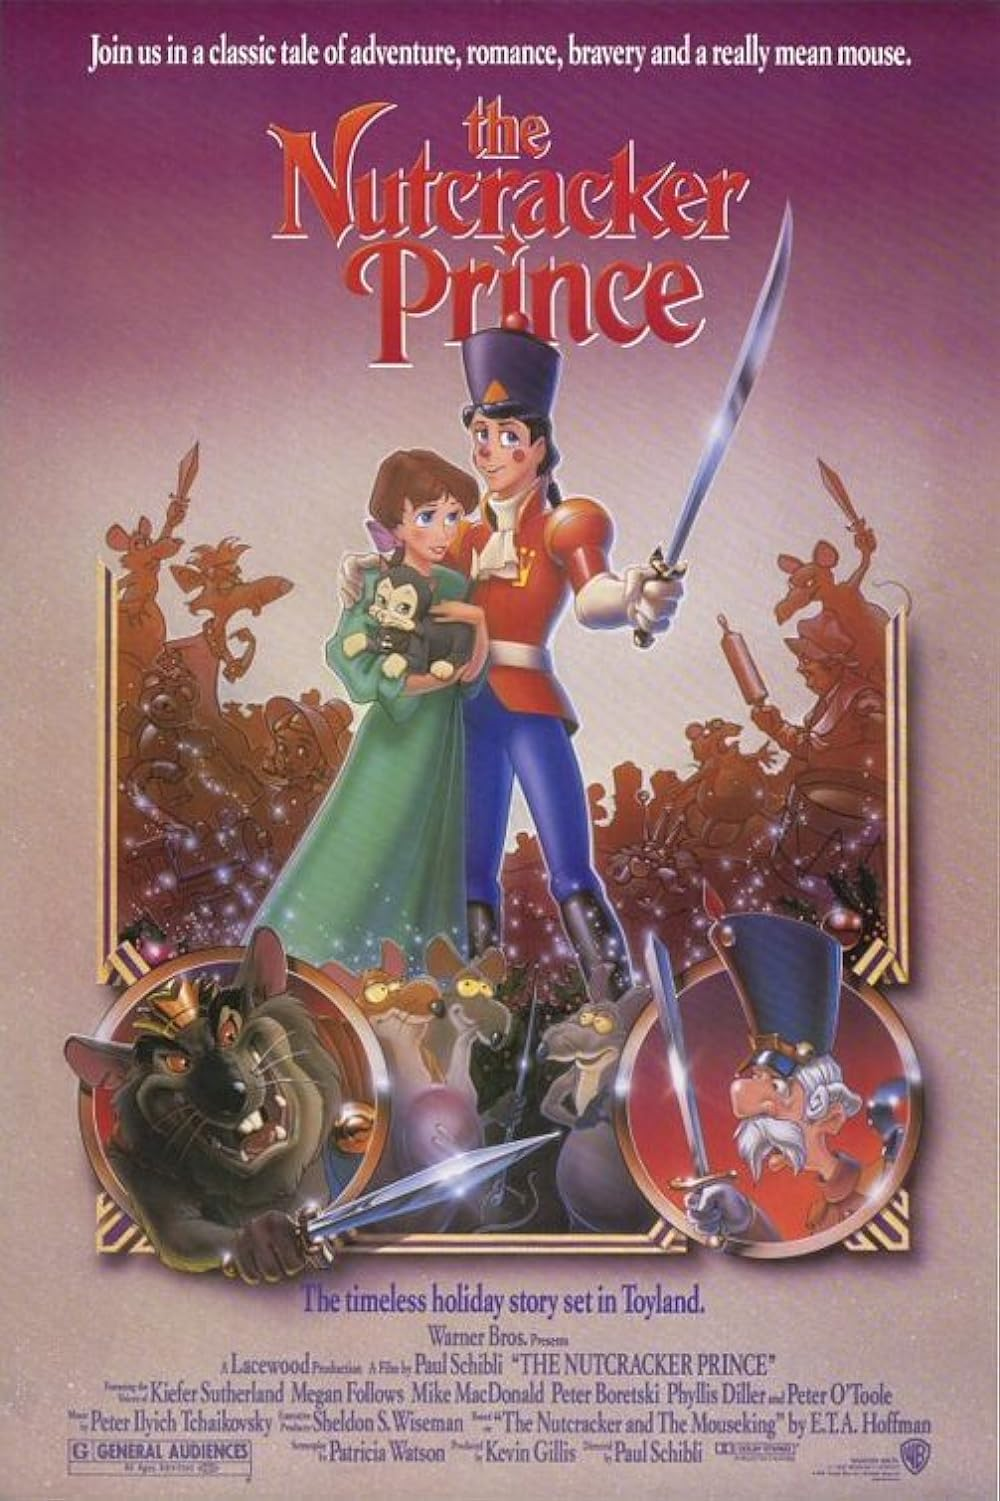 Best Christmas animated movies - The Nutcracker Prince